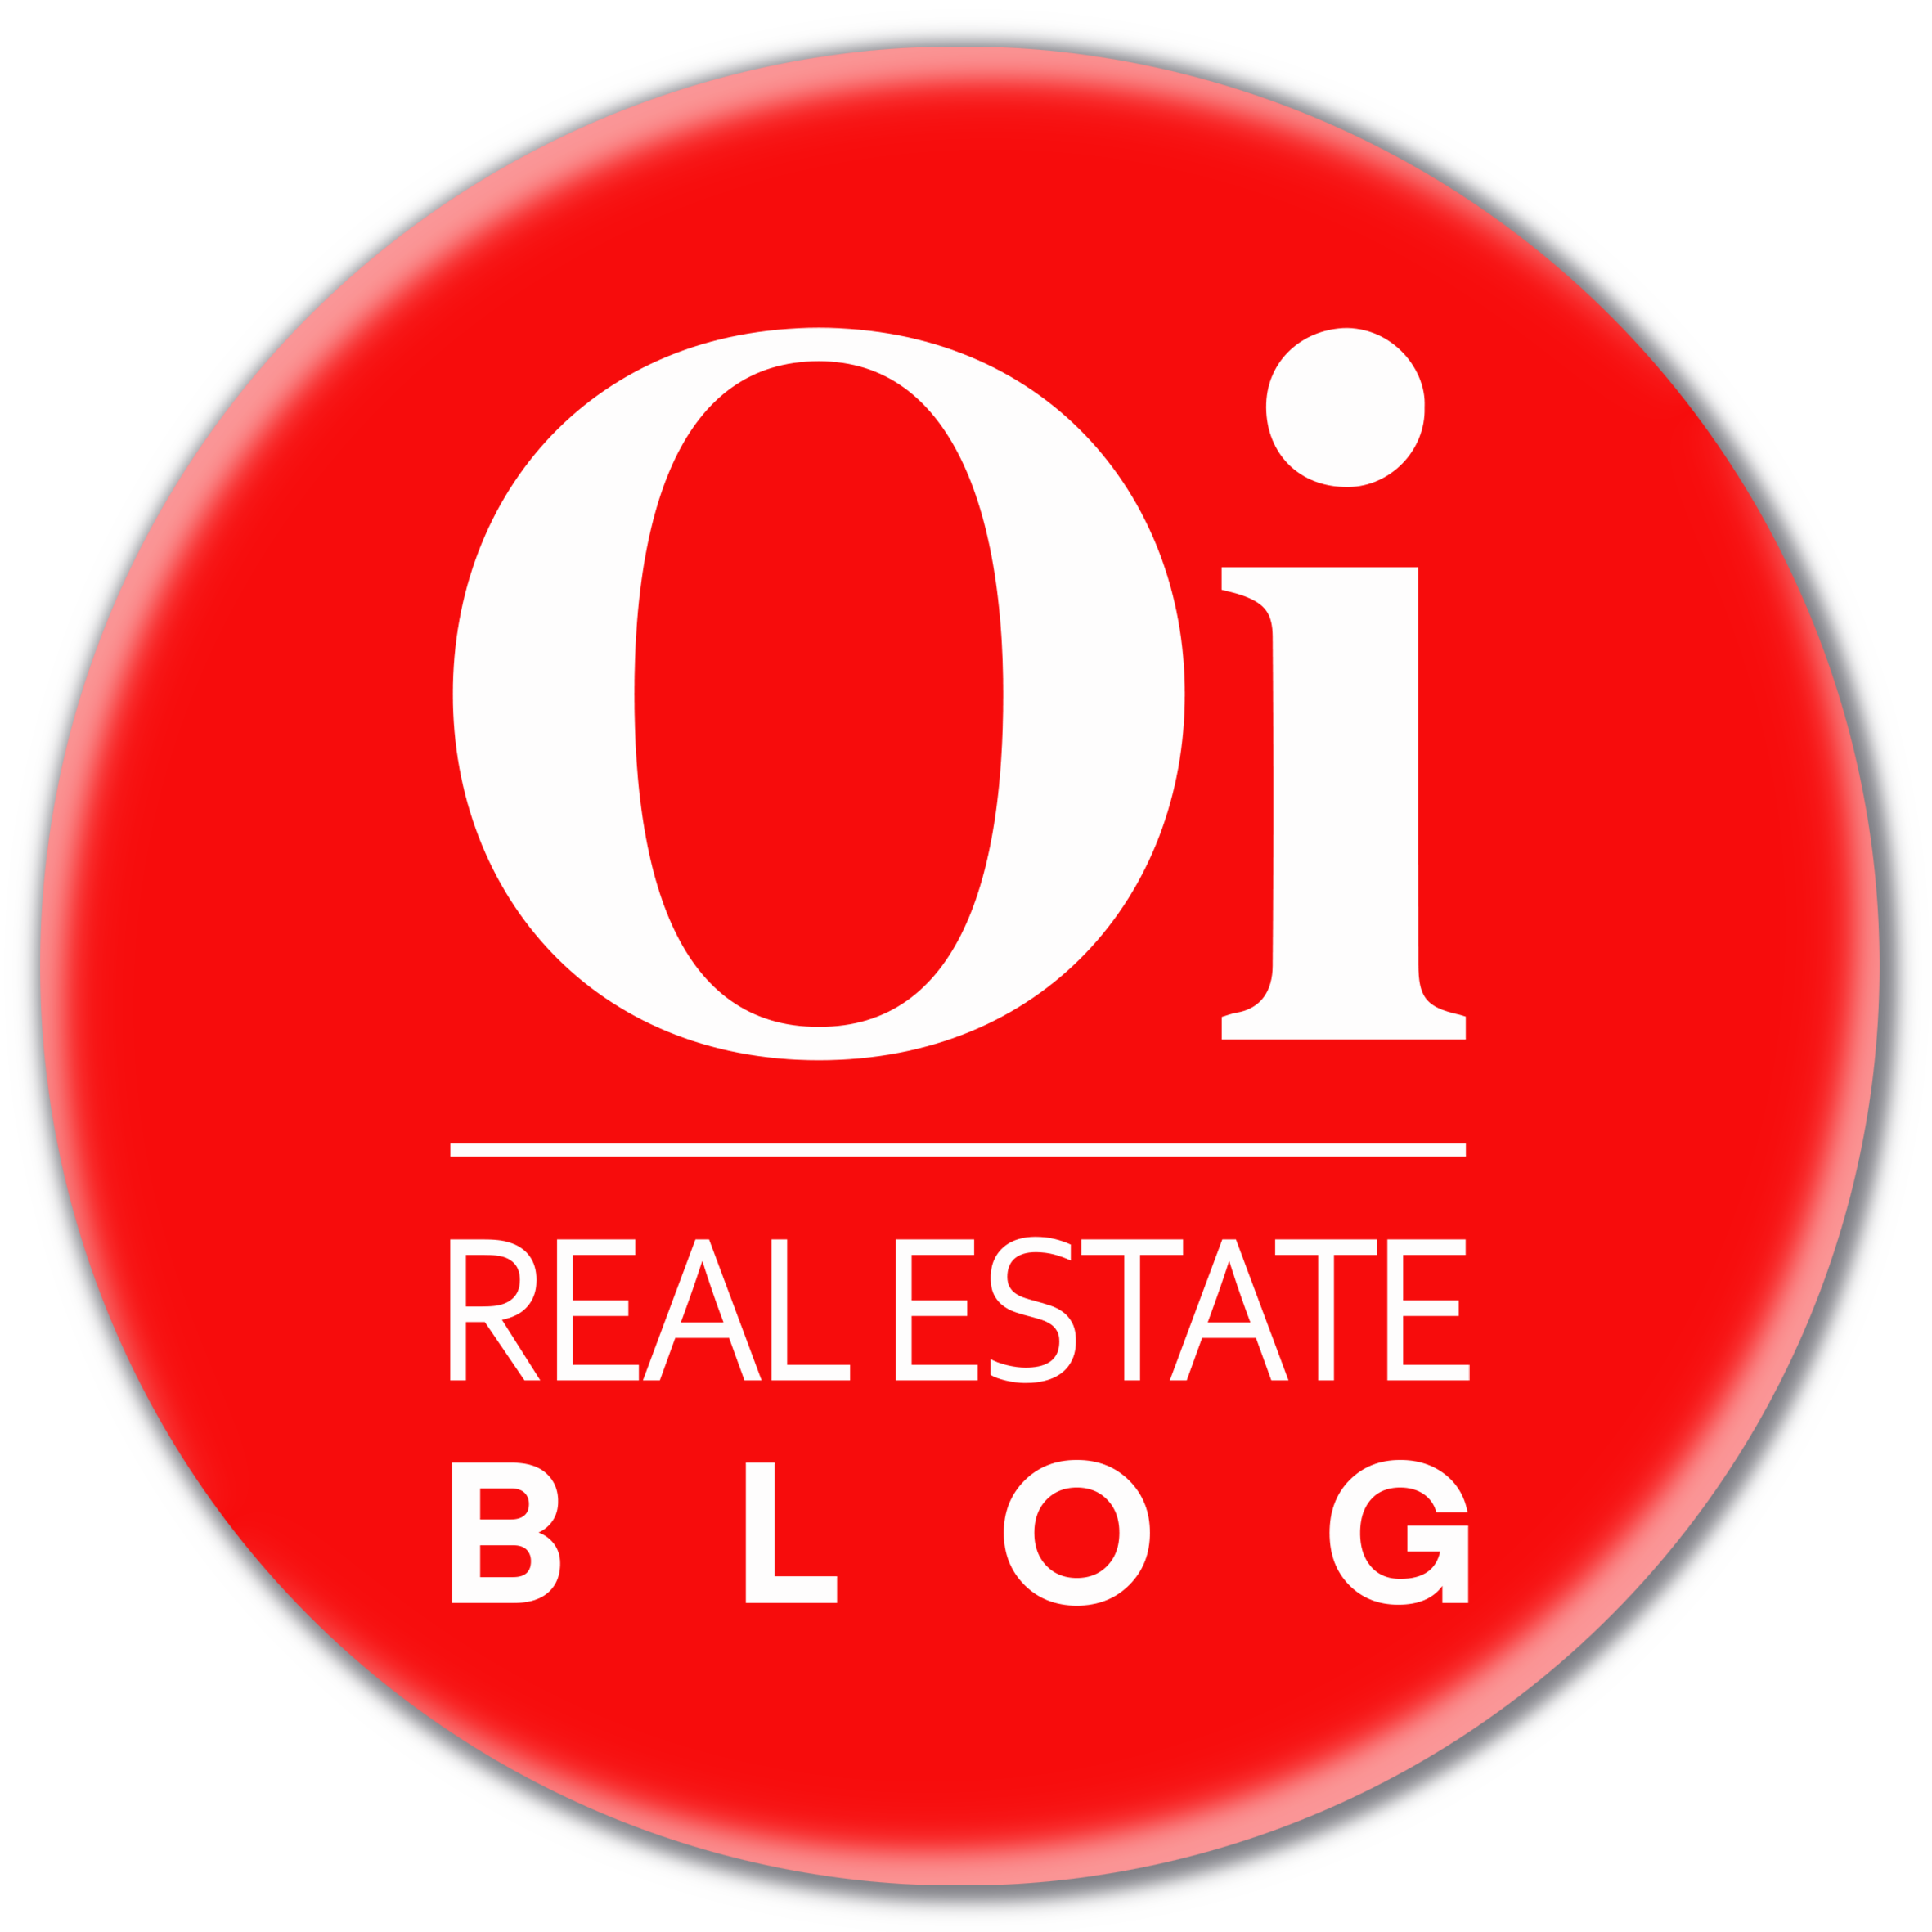 Blog Oi Real Estate